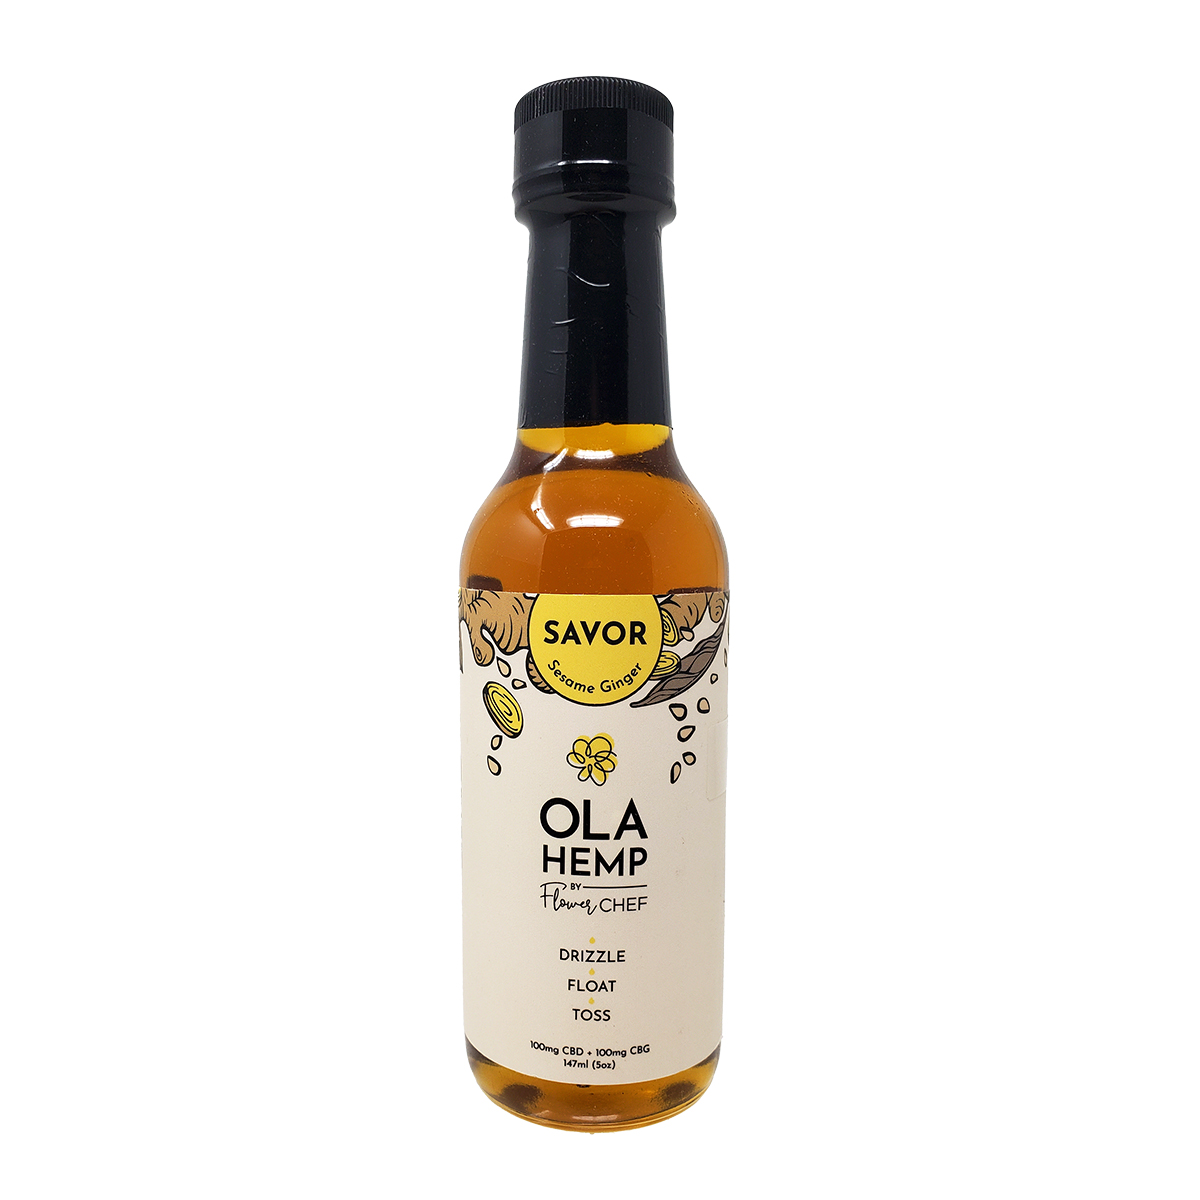 Ola Hemp SAVOR CBD infused culinary oil from celebrity flower chef Juliue Houser